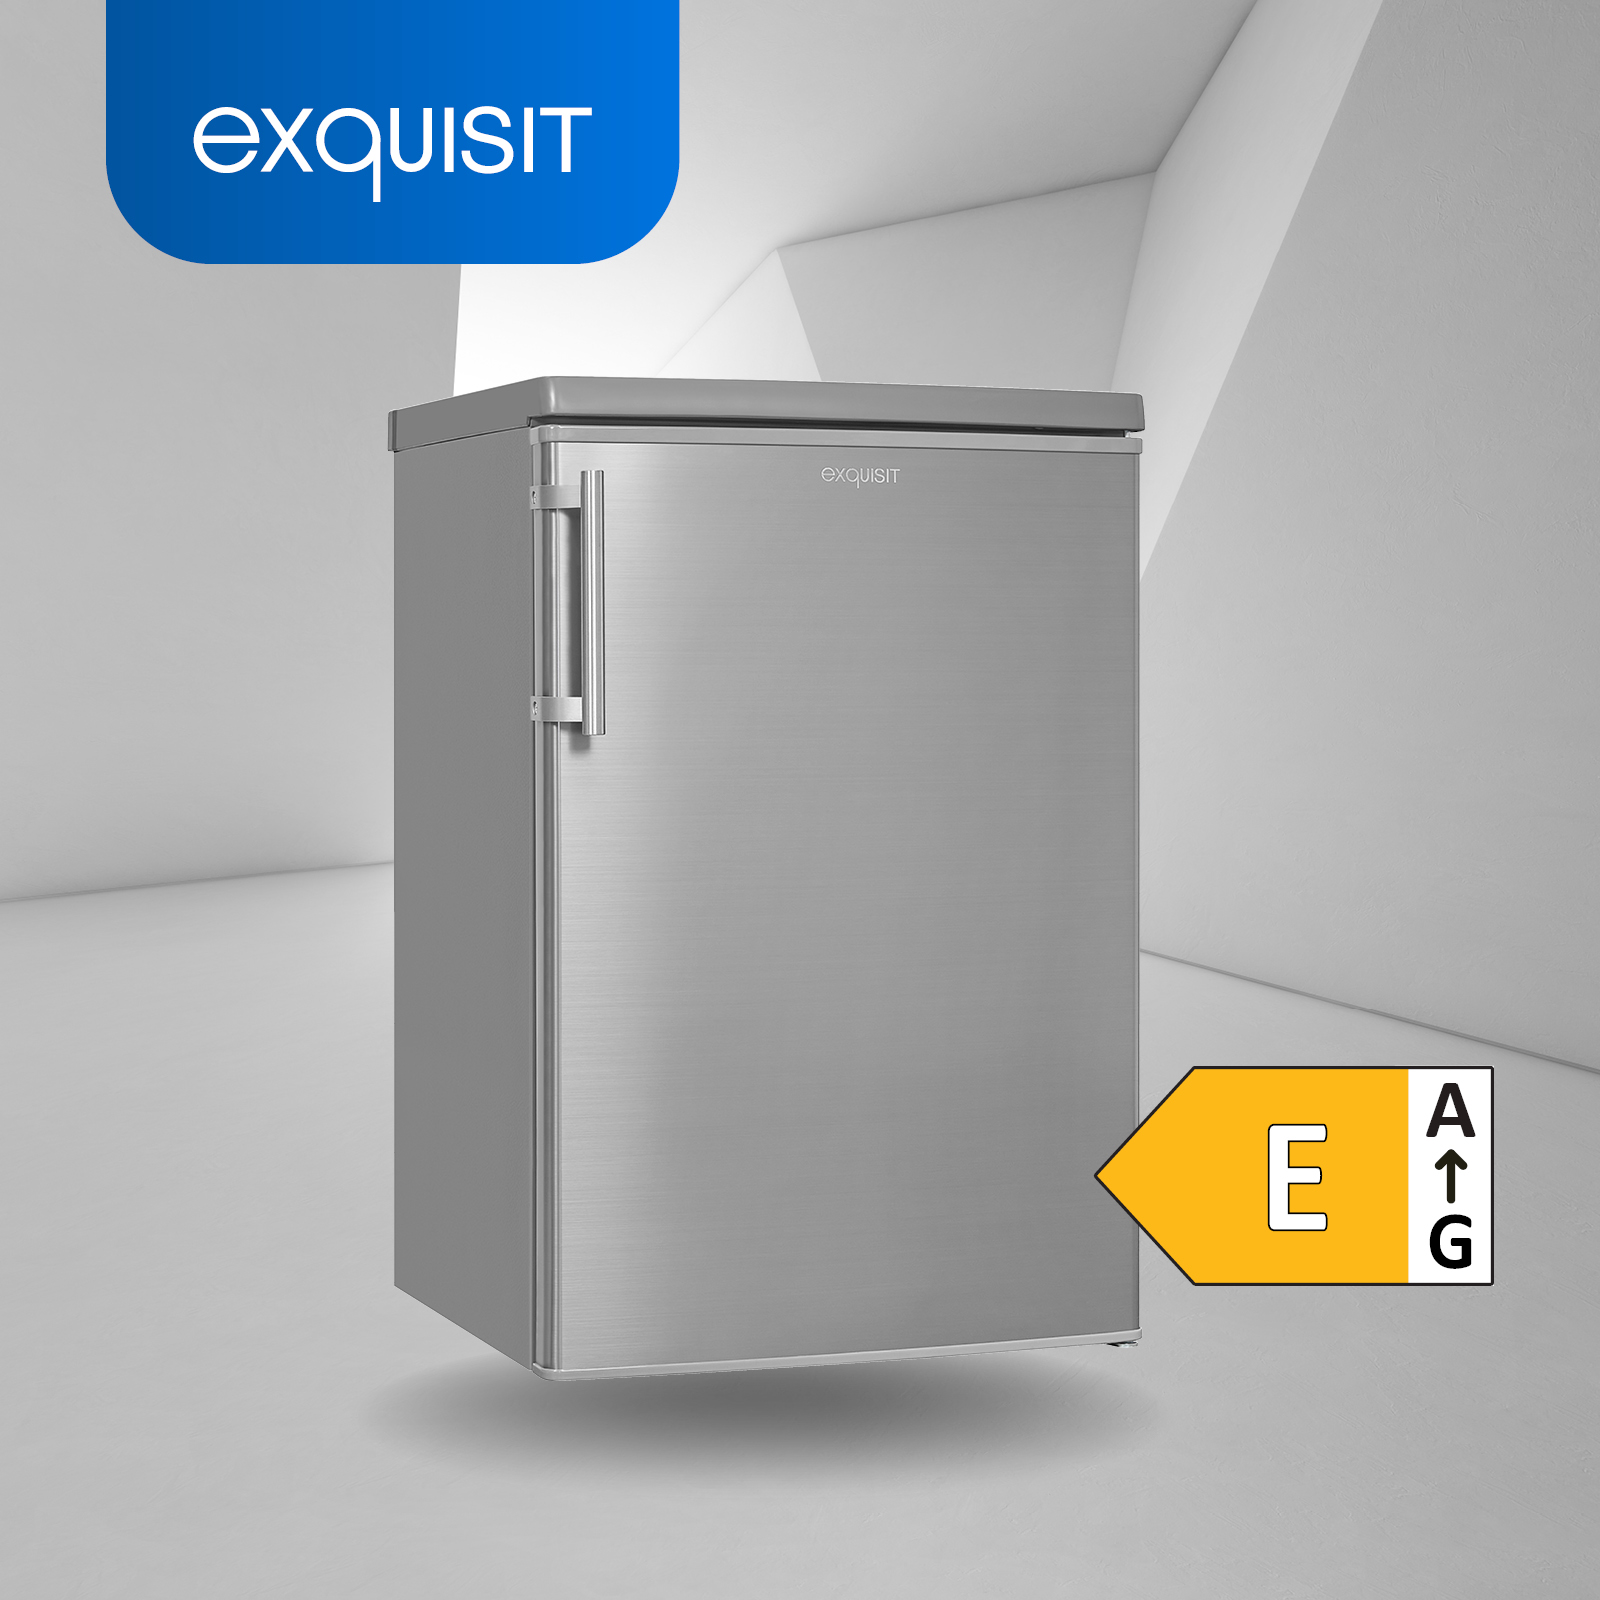 EXQUISIT KS16-4-HE-040E inoxlook Kühlschrank E, mm Edelstahloptik) hoch, kWh/Jahr, 855 (139,00